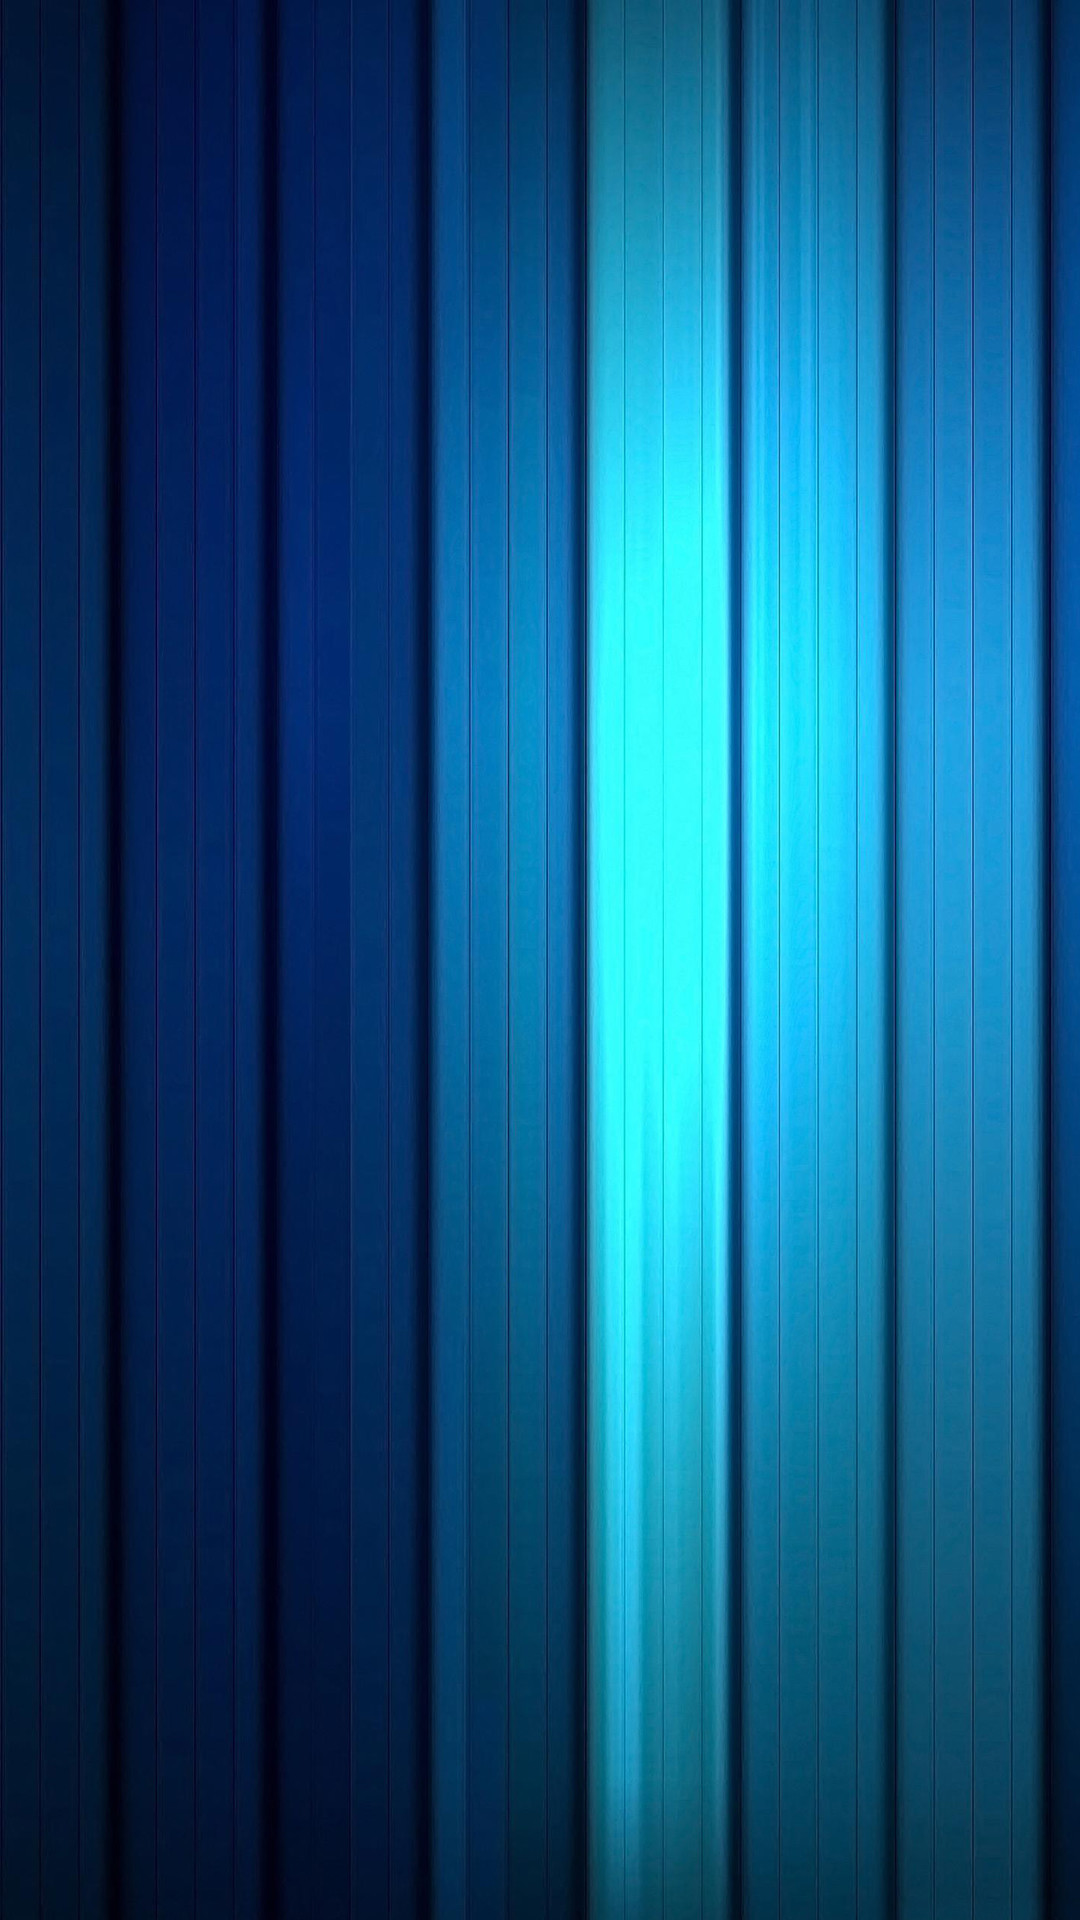 1080x1920 Blue Lines iPhone 6 Wallpaper, iPhone 6 Wallpaper, iPhone 6 Plus, HD .